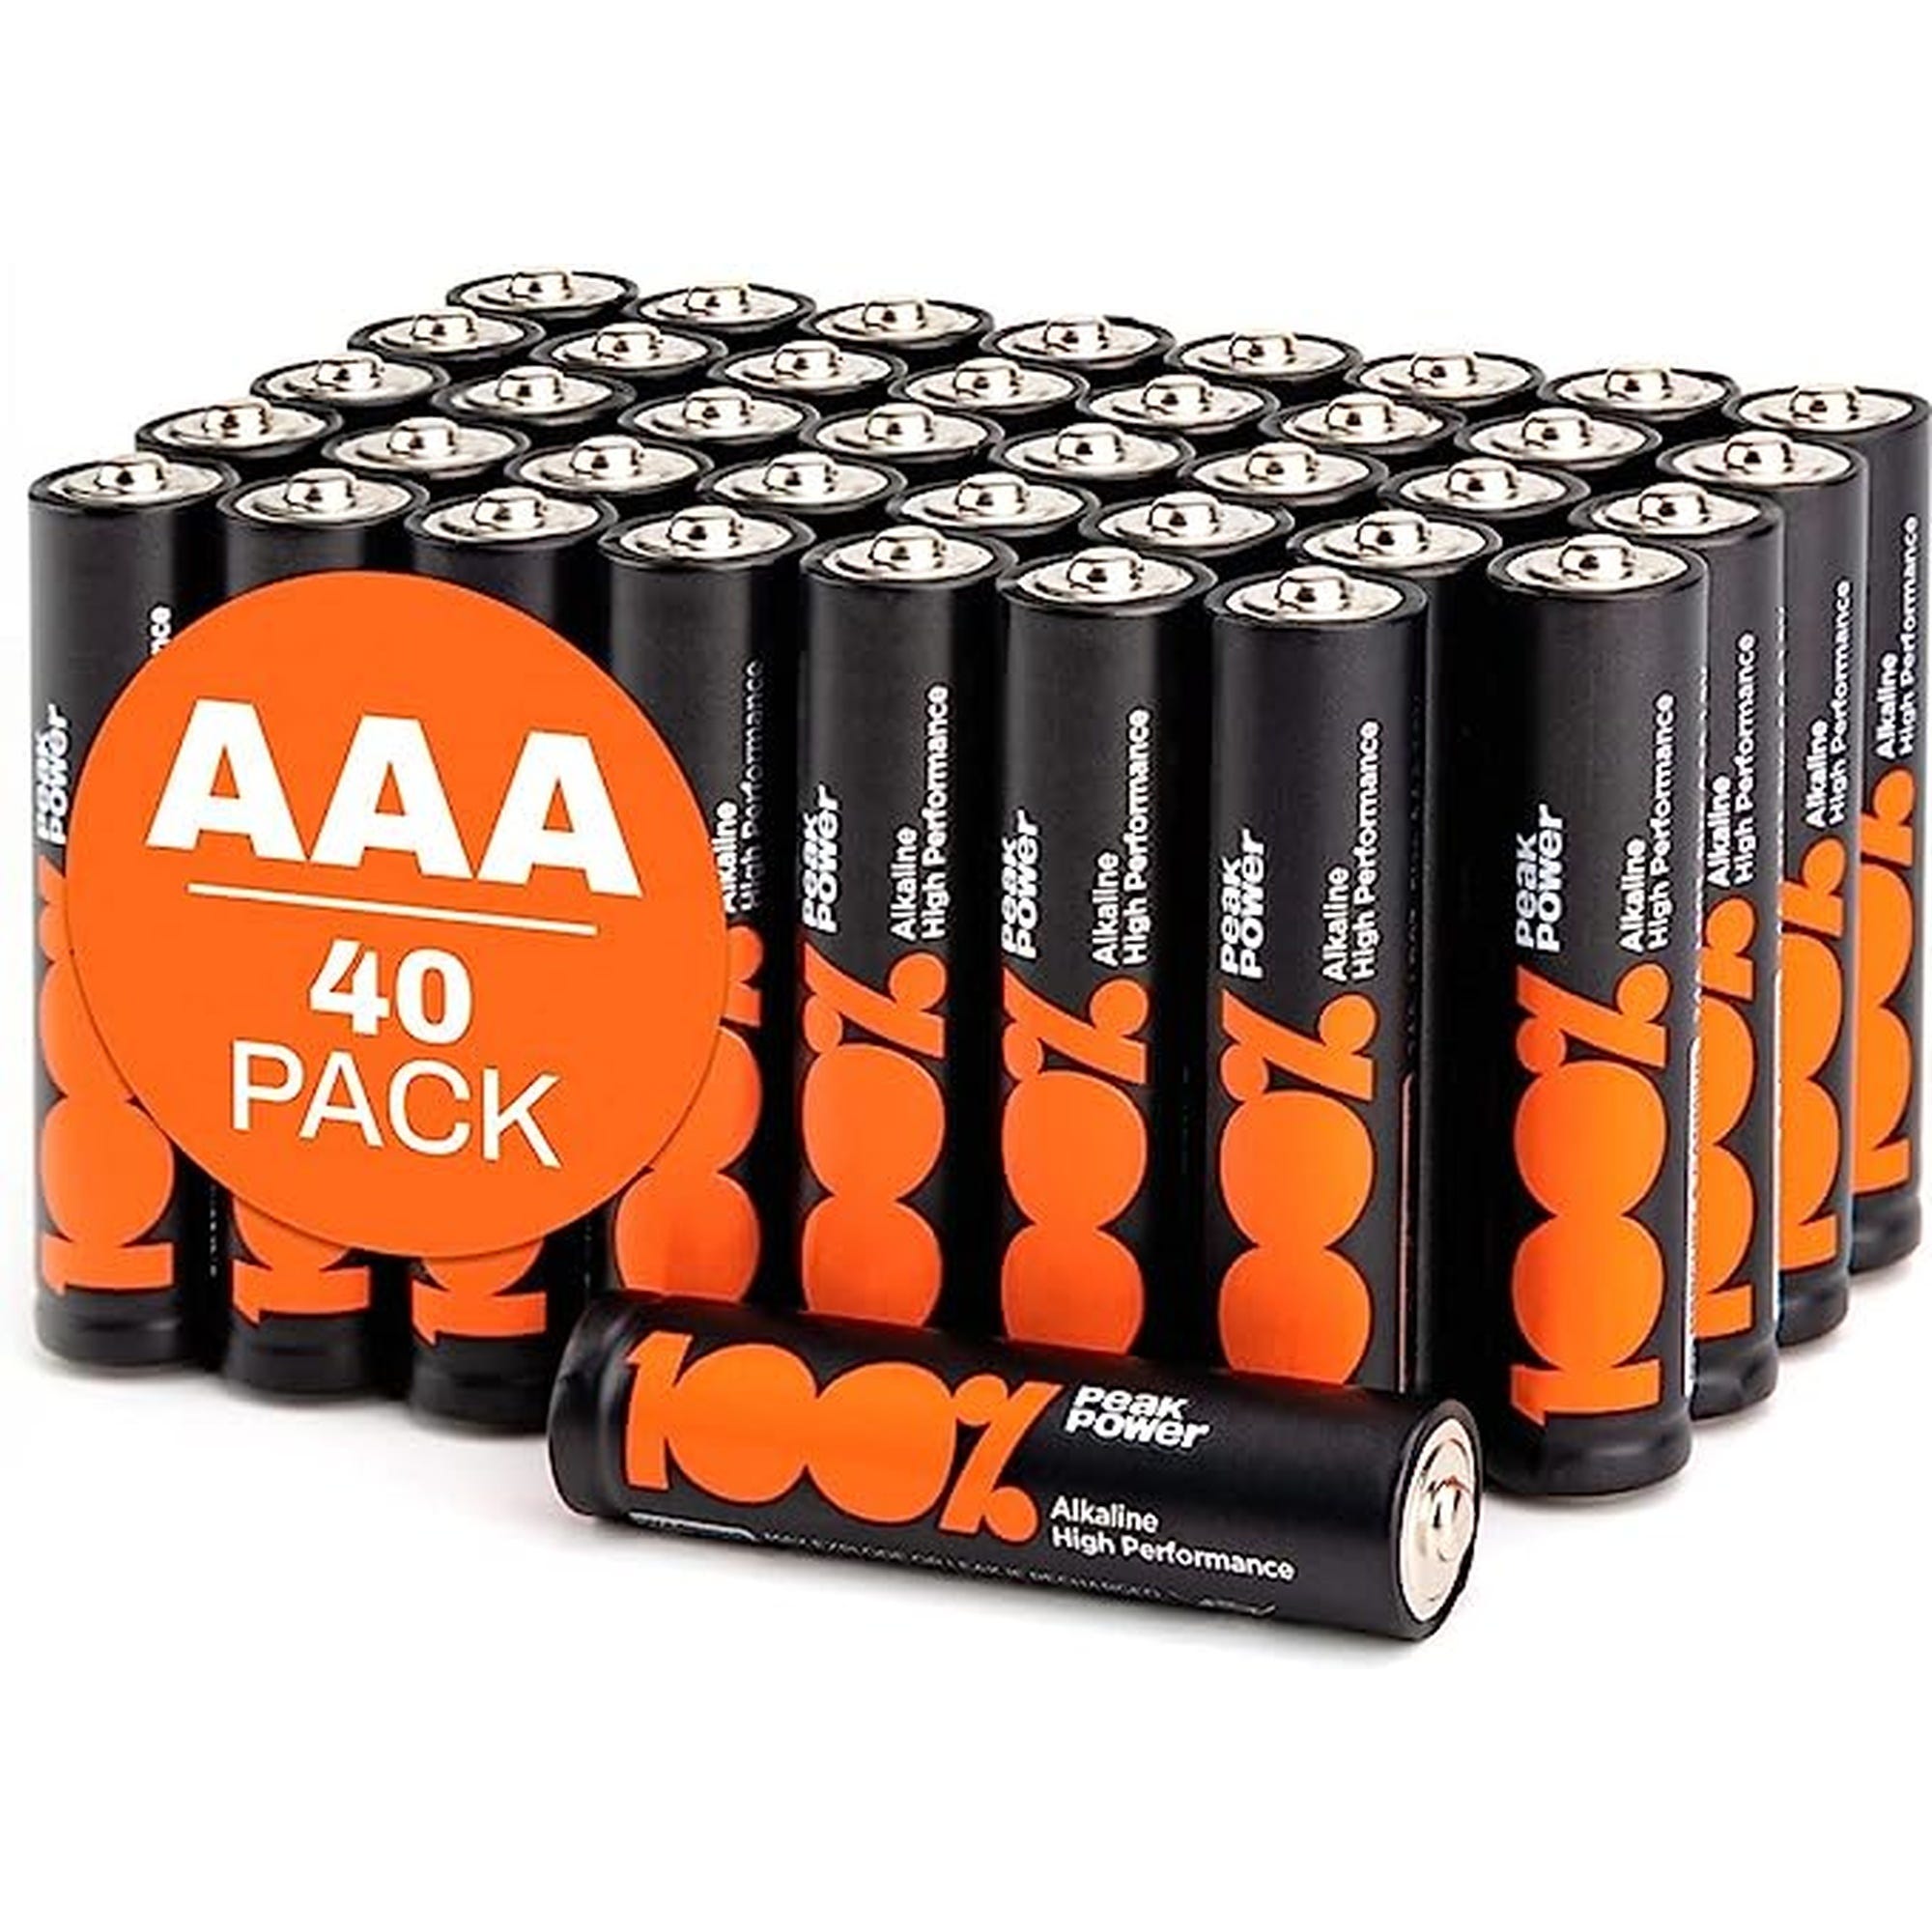 Pilas AAA - Pack de 40 Pilas alcalinas AAA 1.5V LR03 100